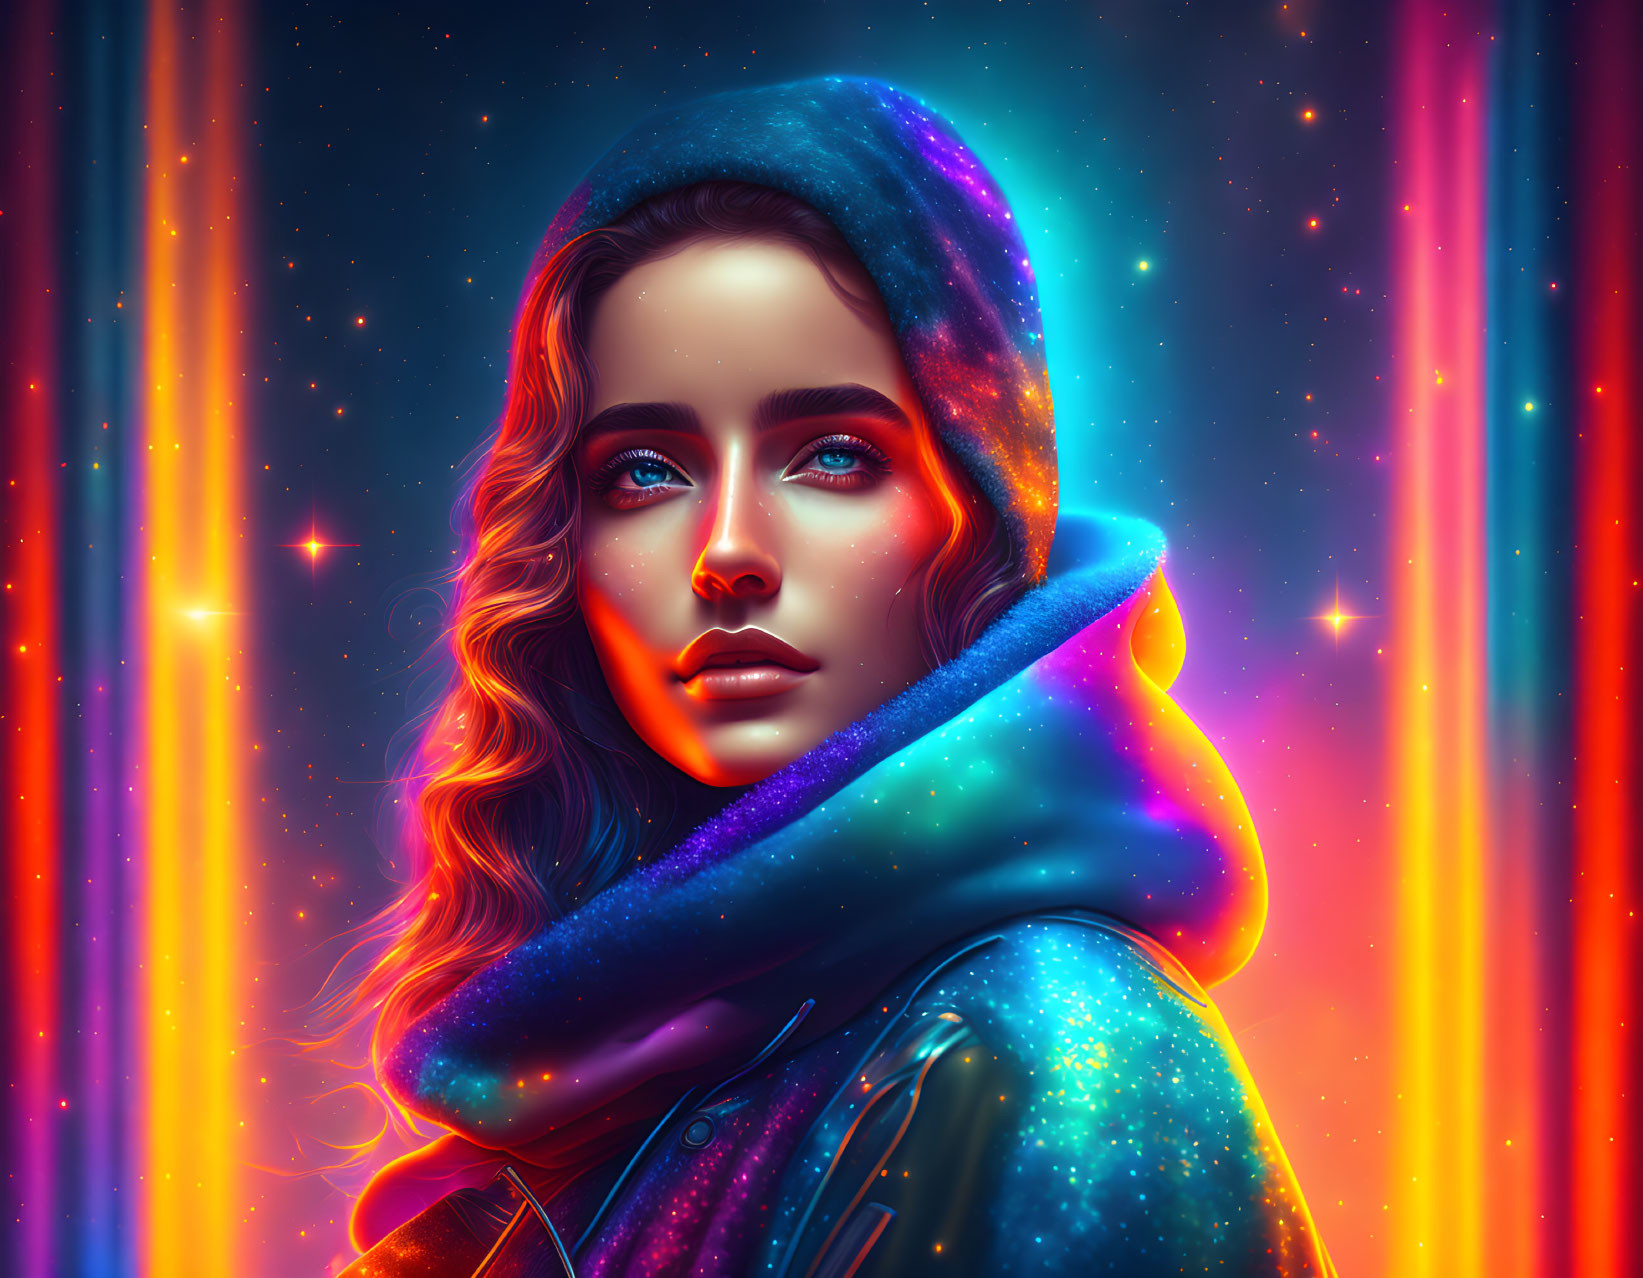 Colorful digital artwork: Woman in hood against cosmic neon backdrop